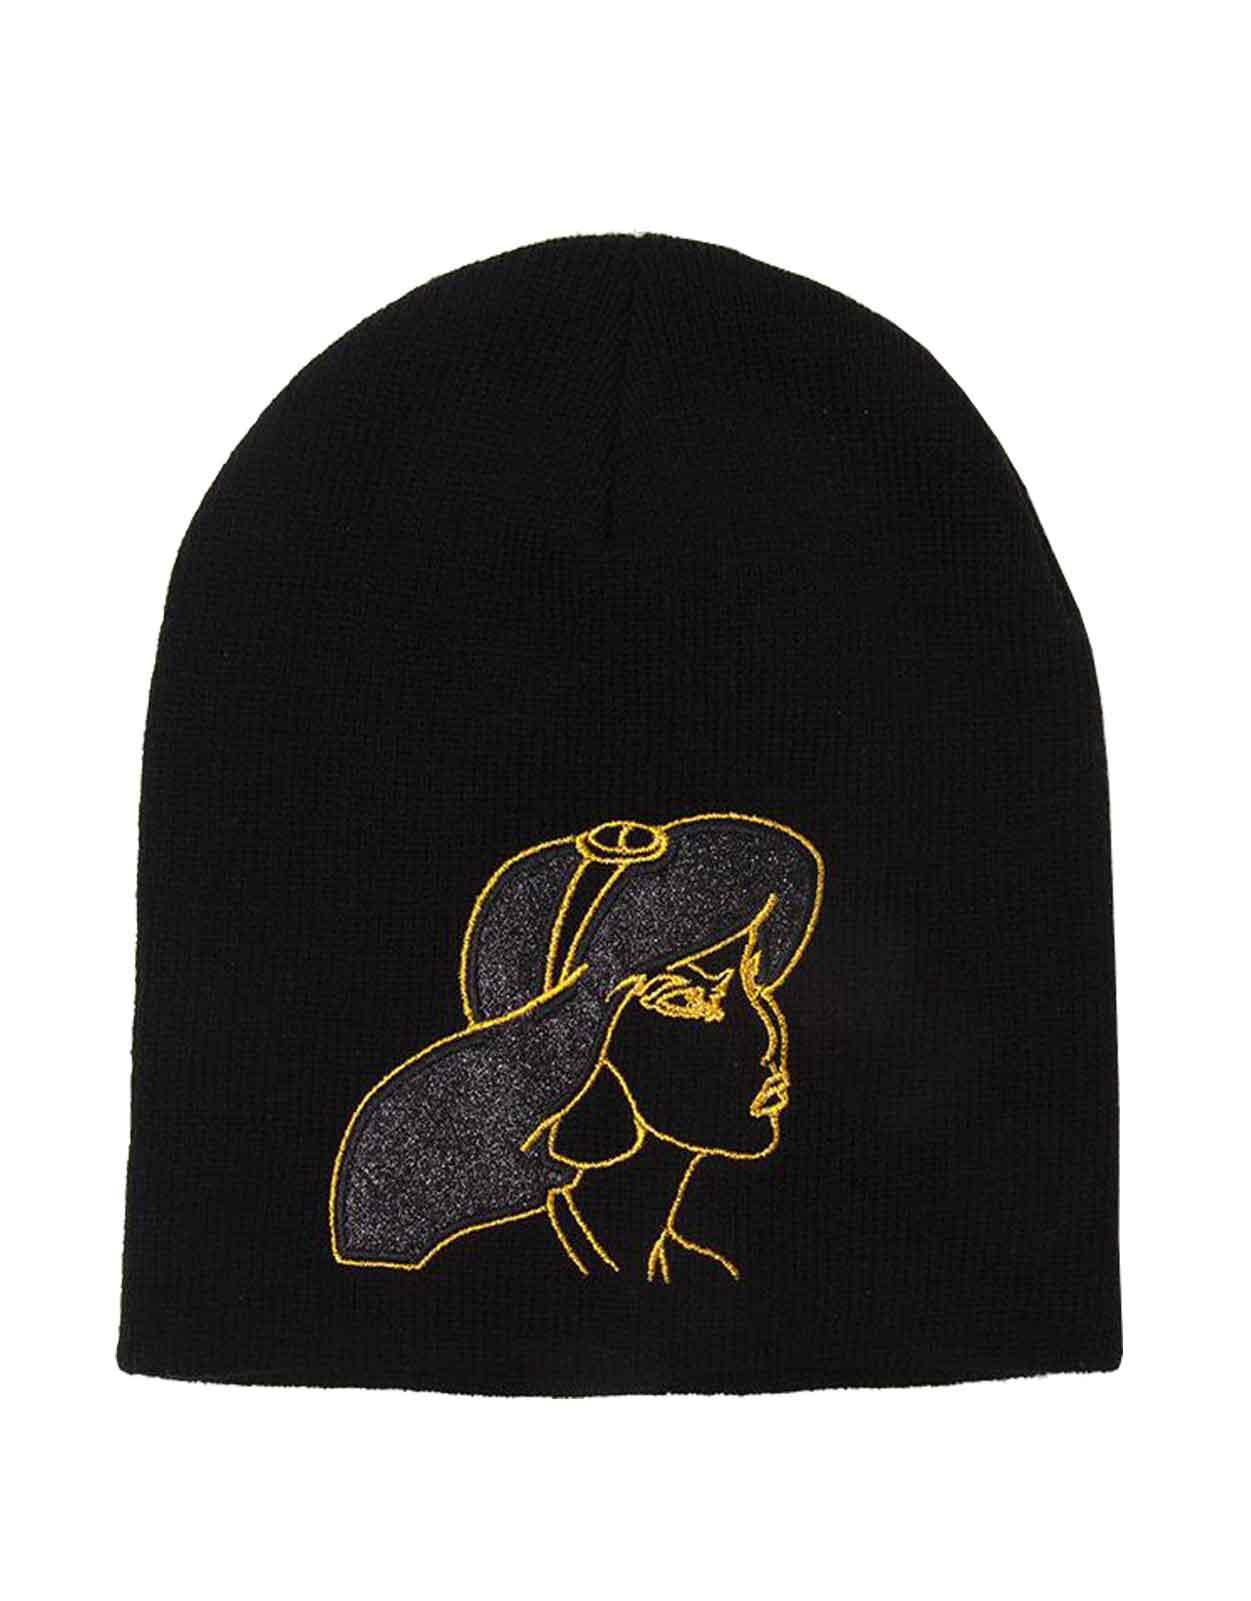 Aladdin Beanie Hat Jasmine profile new Official Disney Black One Size